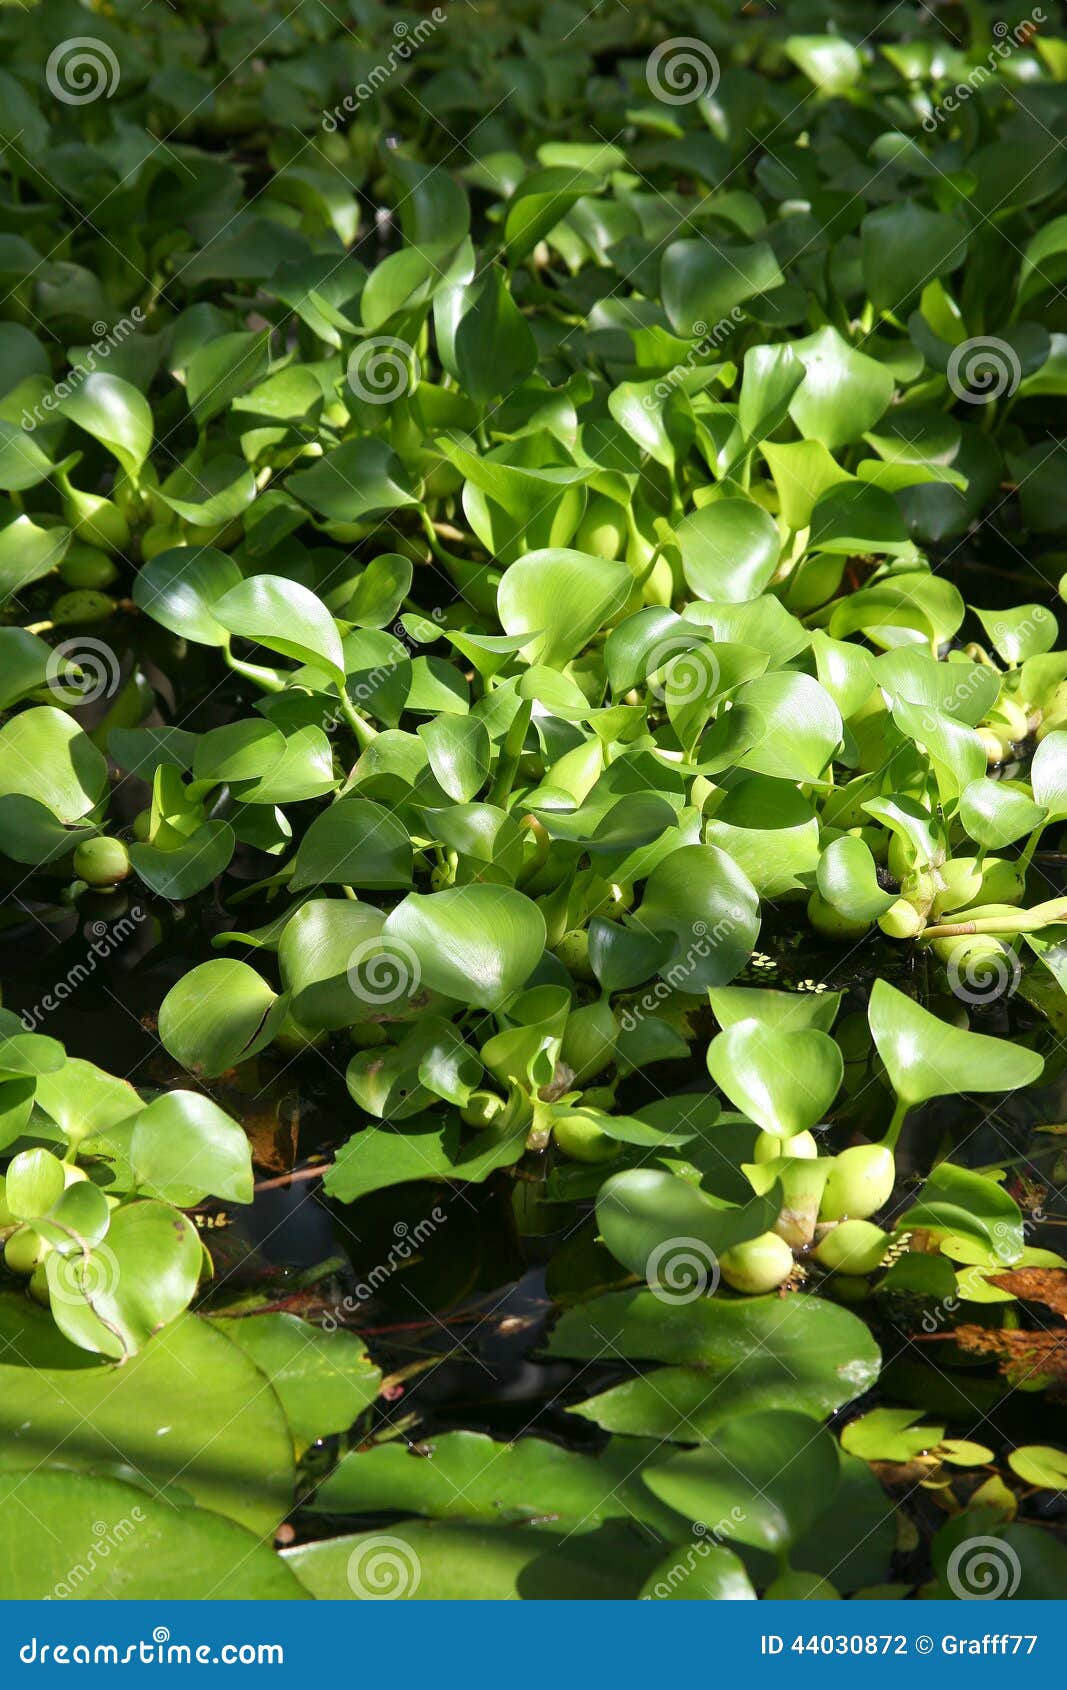 eichornia, water hyacinth